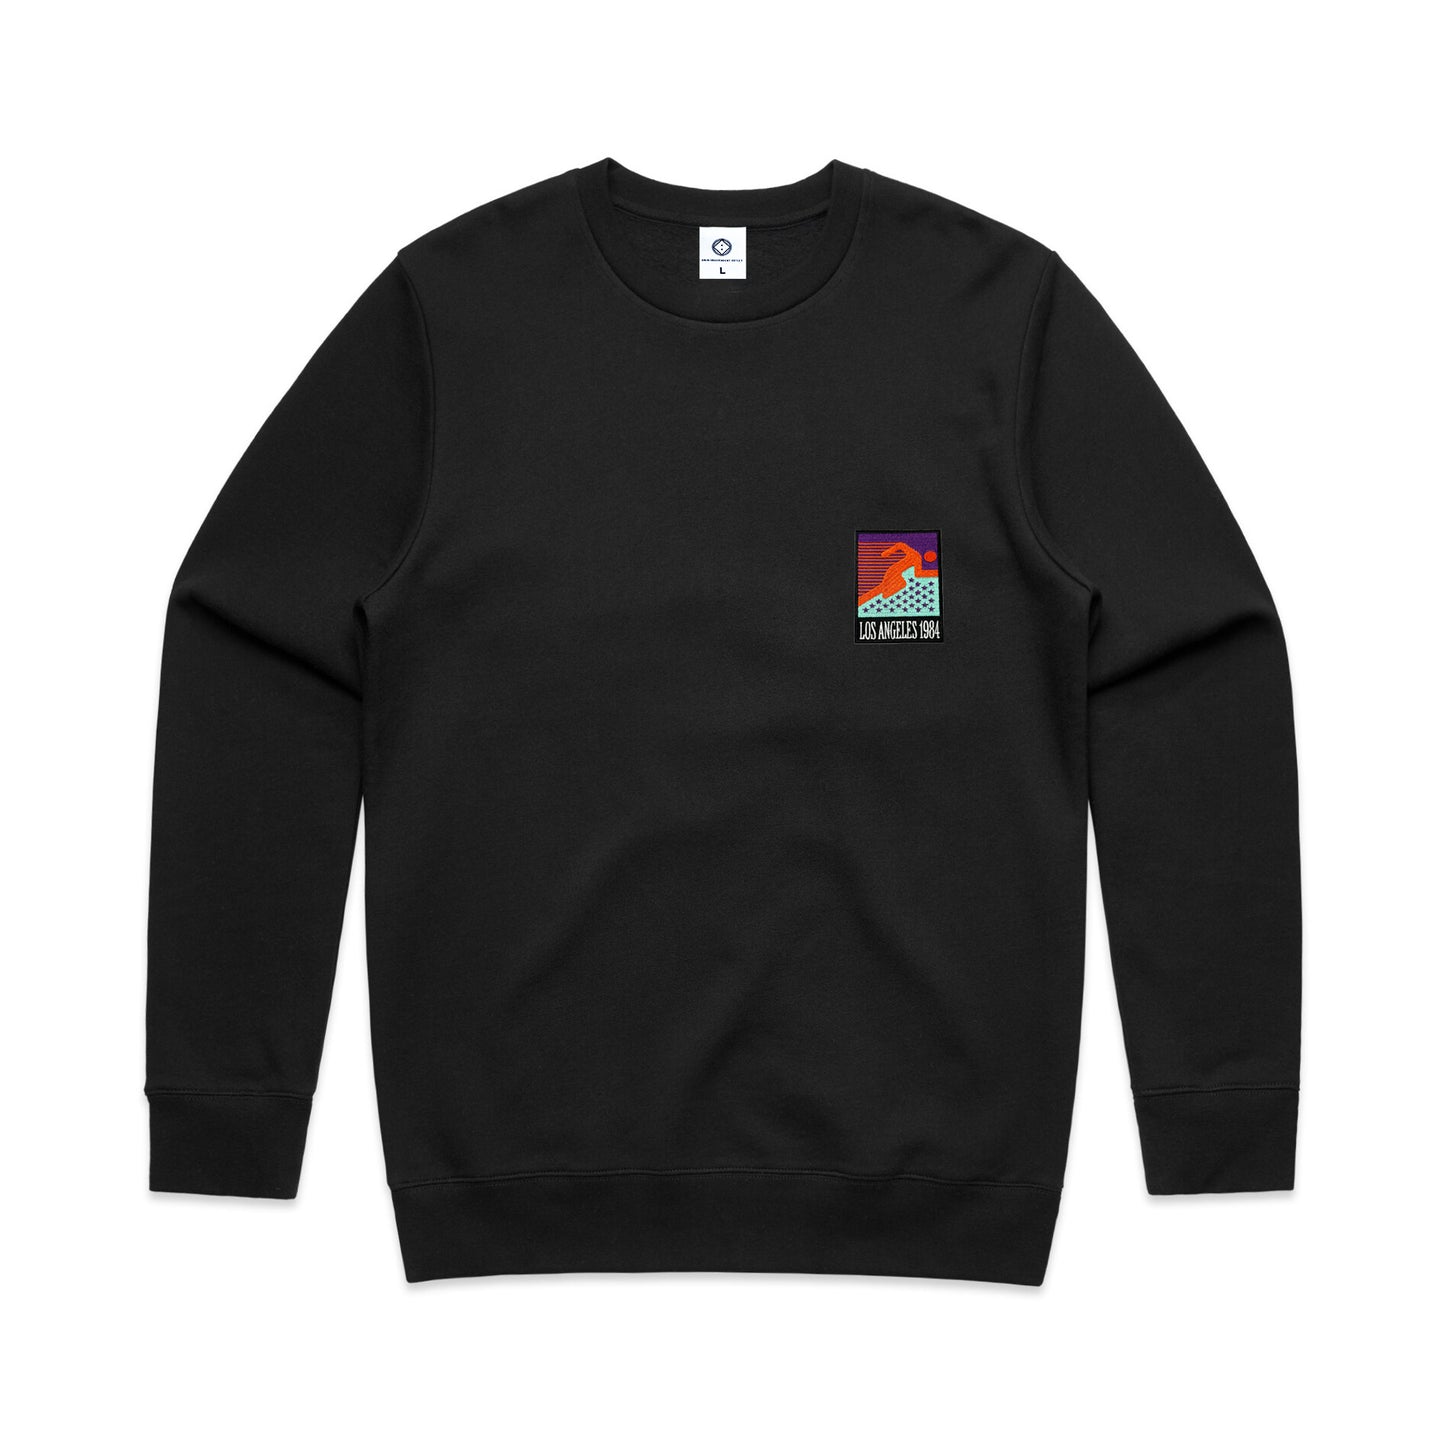 Vice 84 'LA84 Runner Patch' Crew Sweater - Black